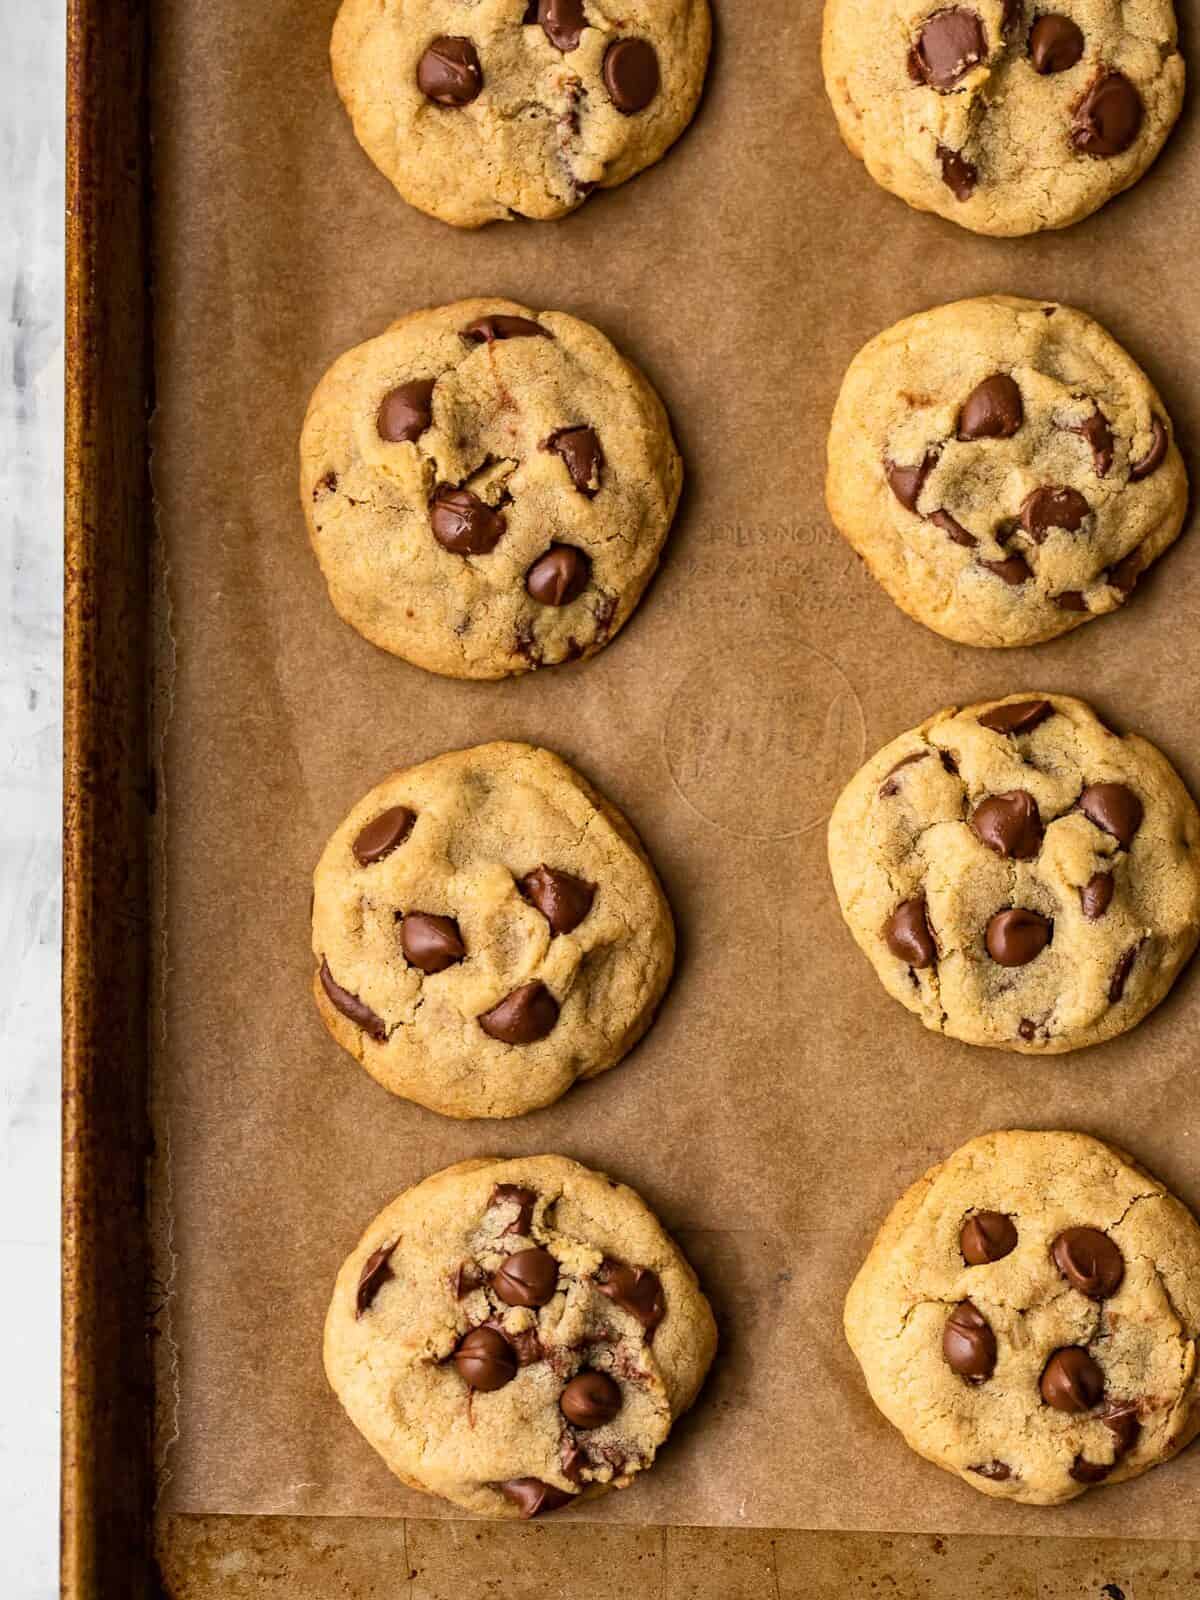 gluten free chocolate chip cookies arranged on a baking sheet